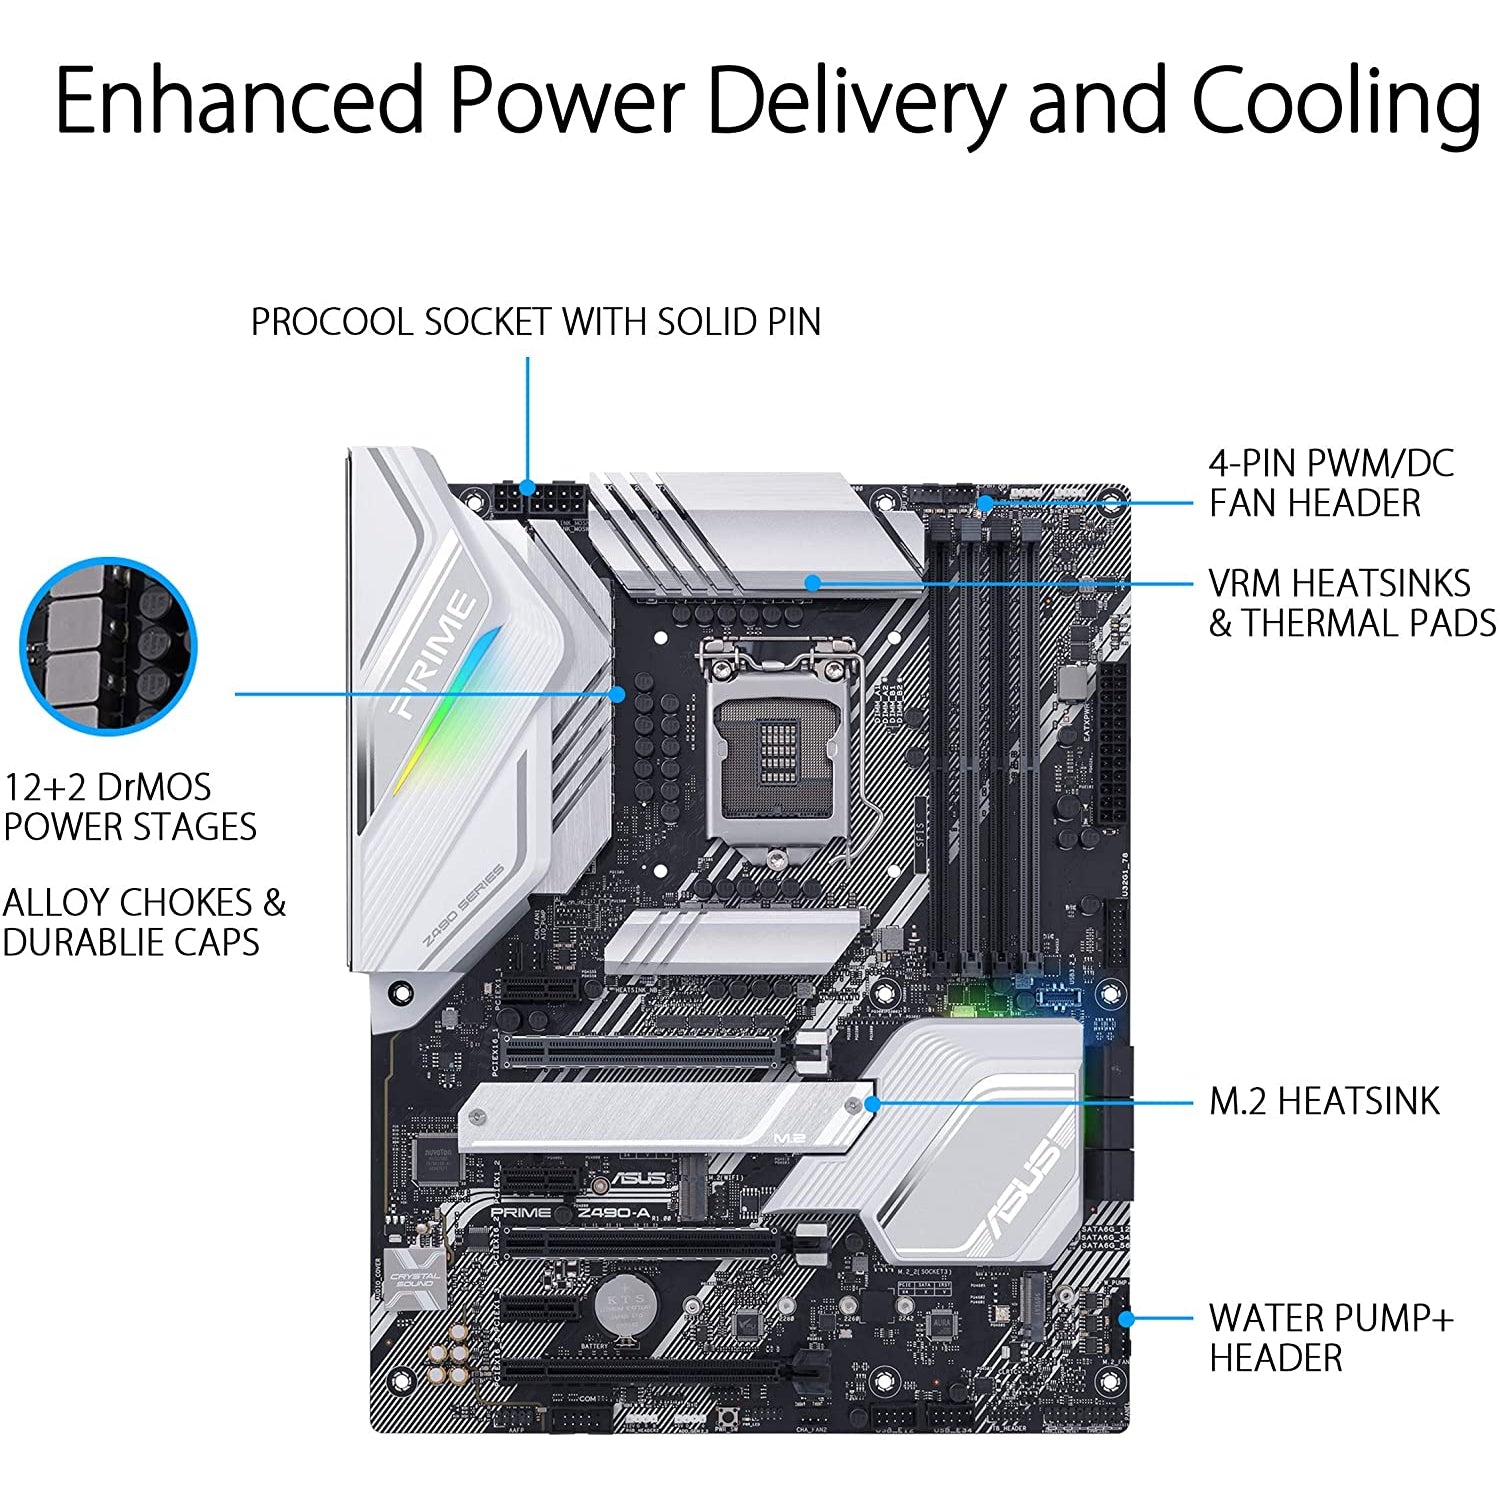 ASUS Prime Z490-A Intel Z490 (LGA 1200), RGB ATX Motherboard